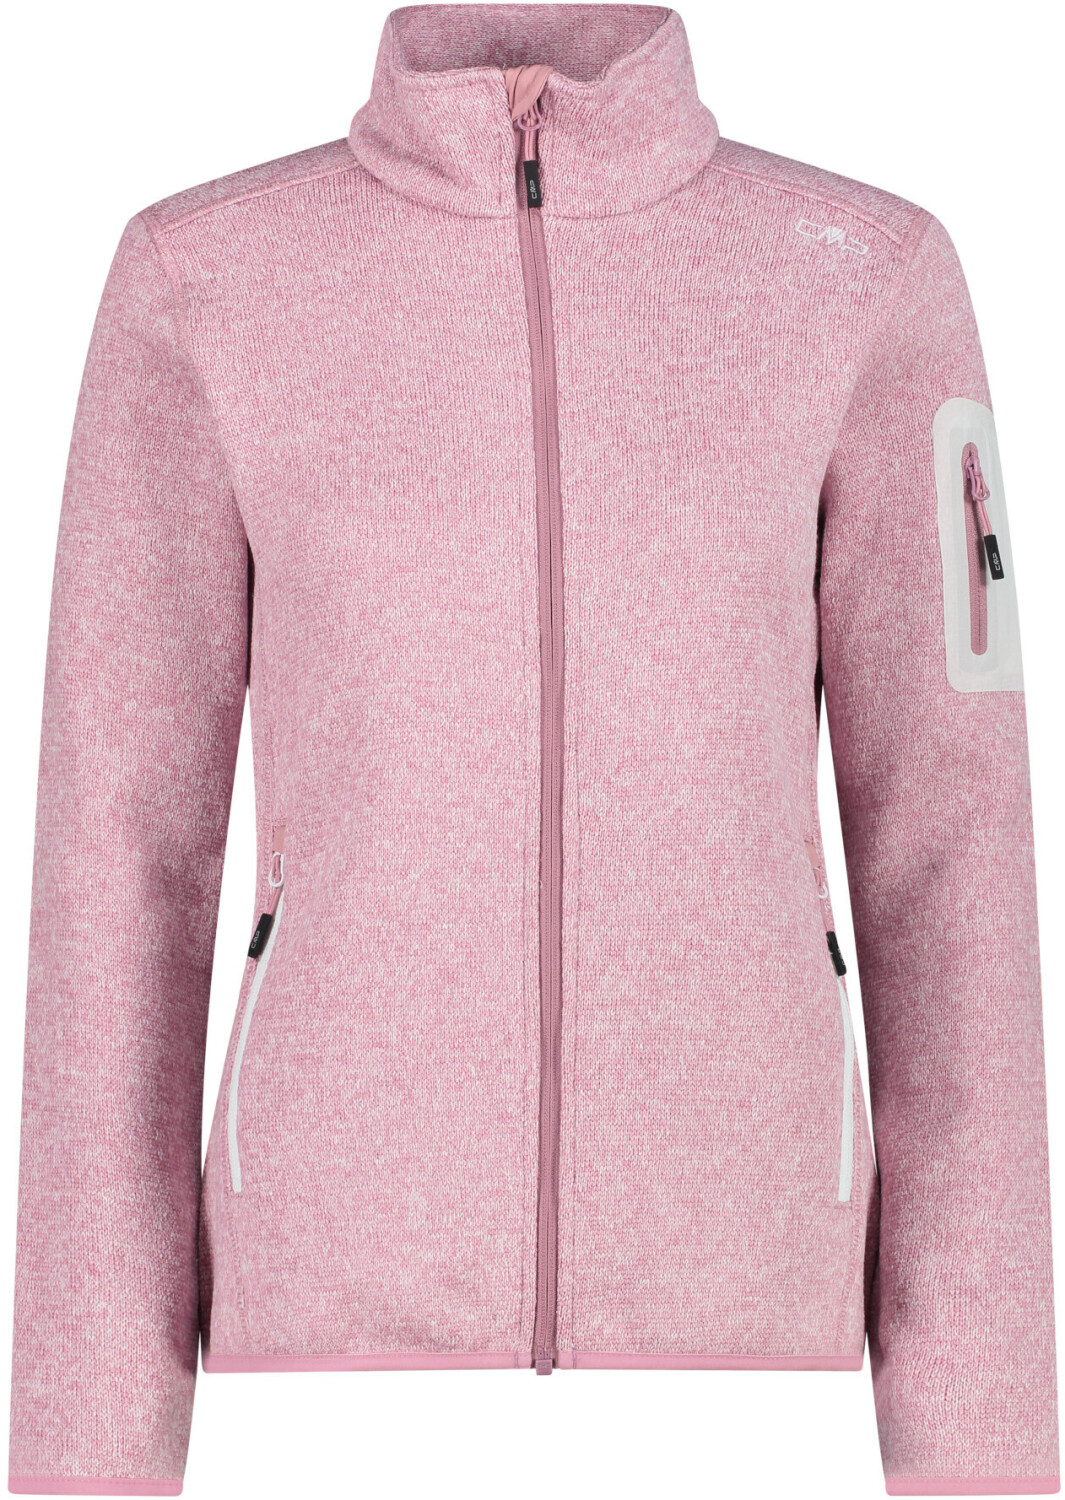 Neues Modell CMP Fleece Jacket Knit-Tech 33,66 Preisvergleich (3H14746) fard-bianco ab Melange bei € 